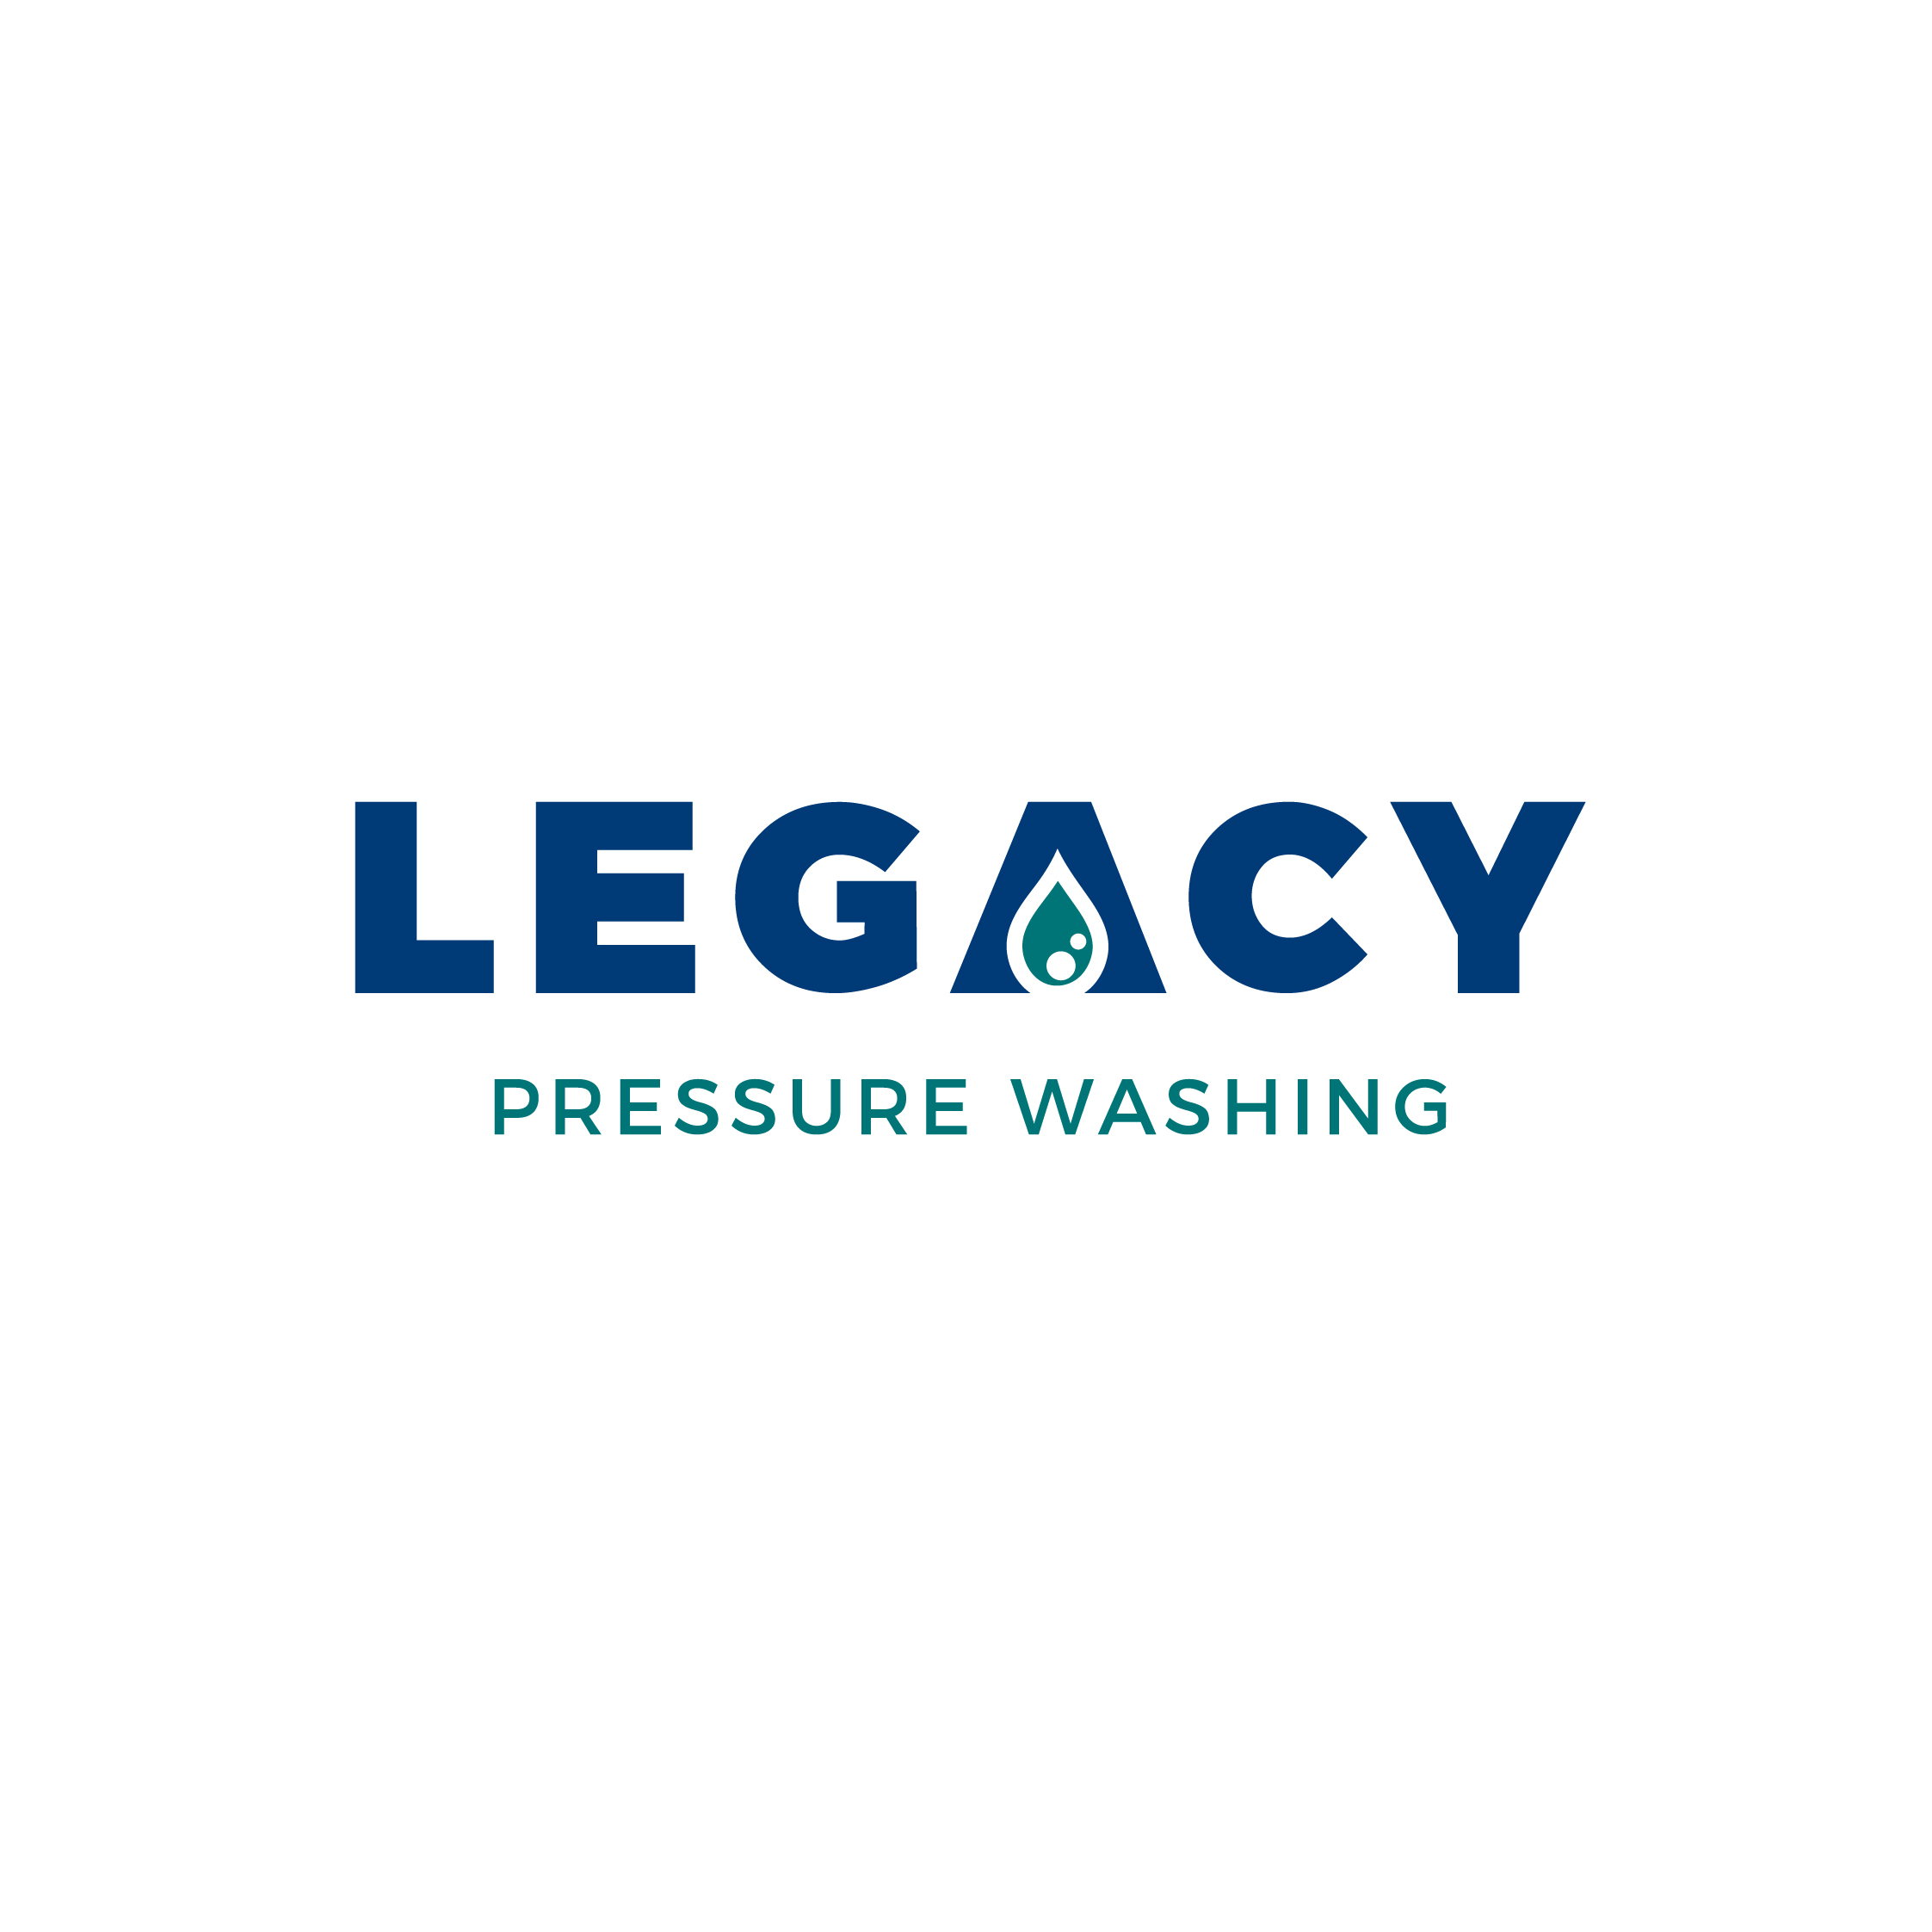 Legacy Pressure Washing - Wordmark_v2_1707428049.jpg